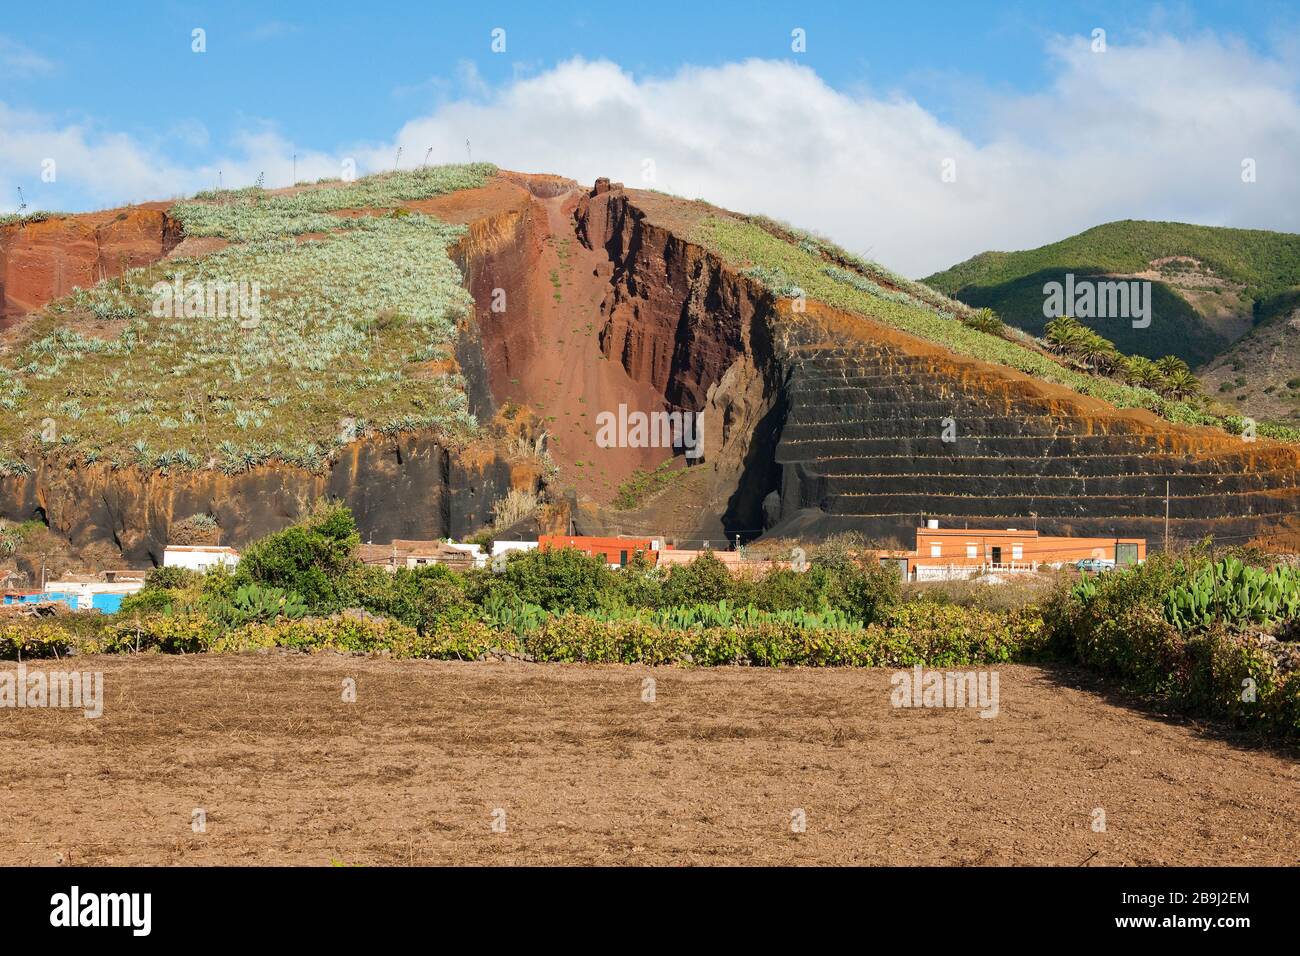 El Palmar Aloehügel, Teneriffa, Kanarische Inseln, Spanien, Europa Stockfoto